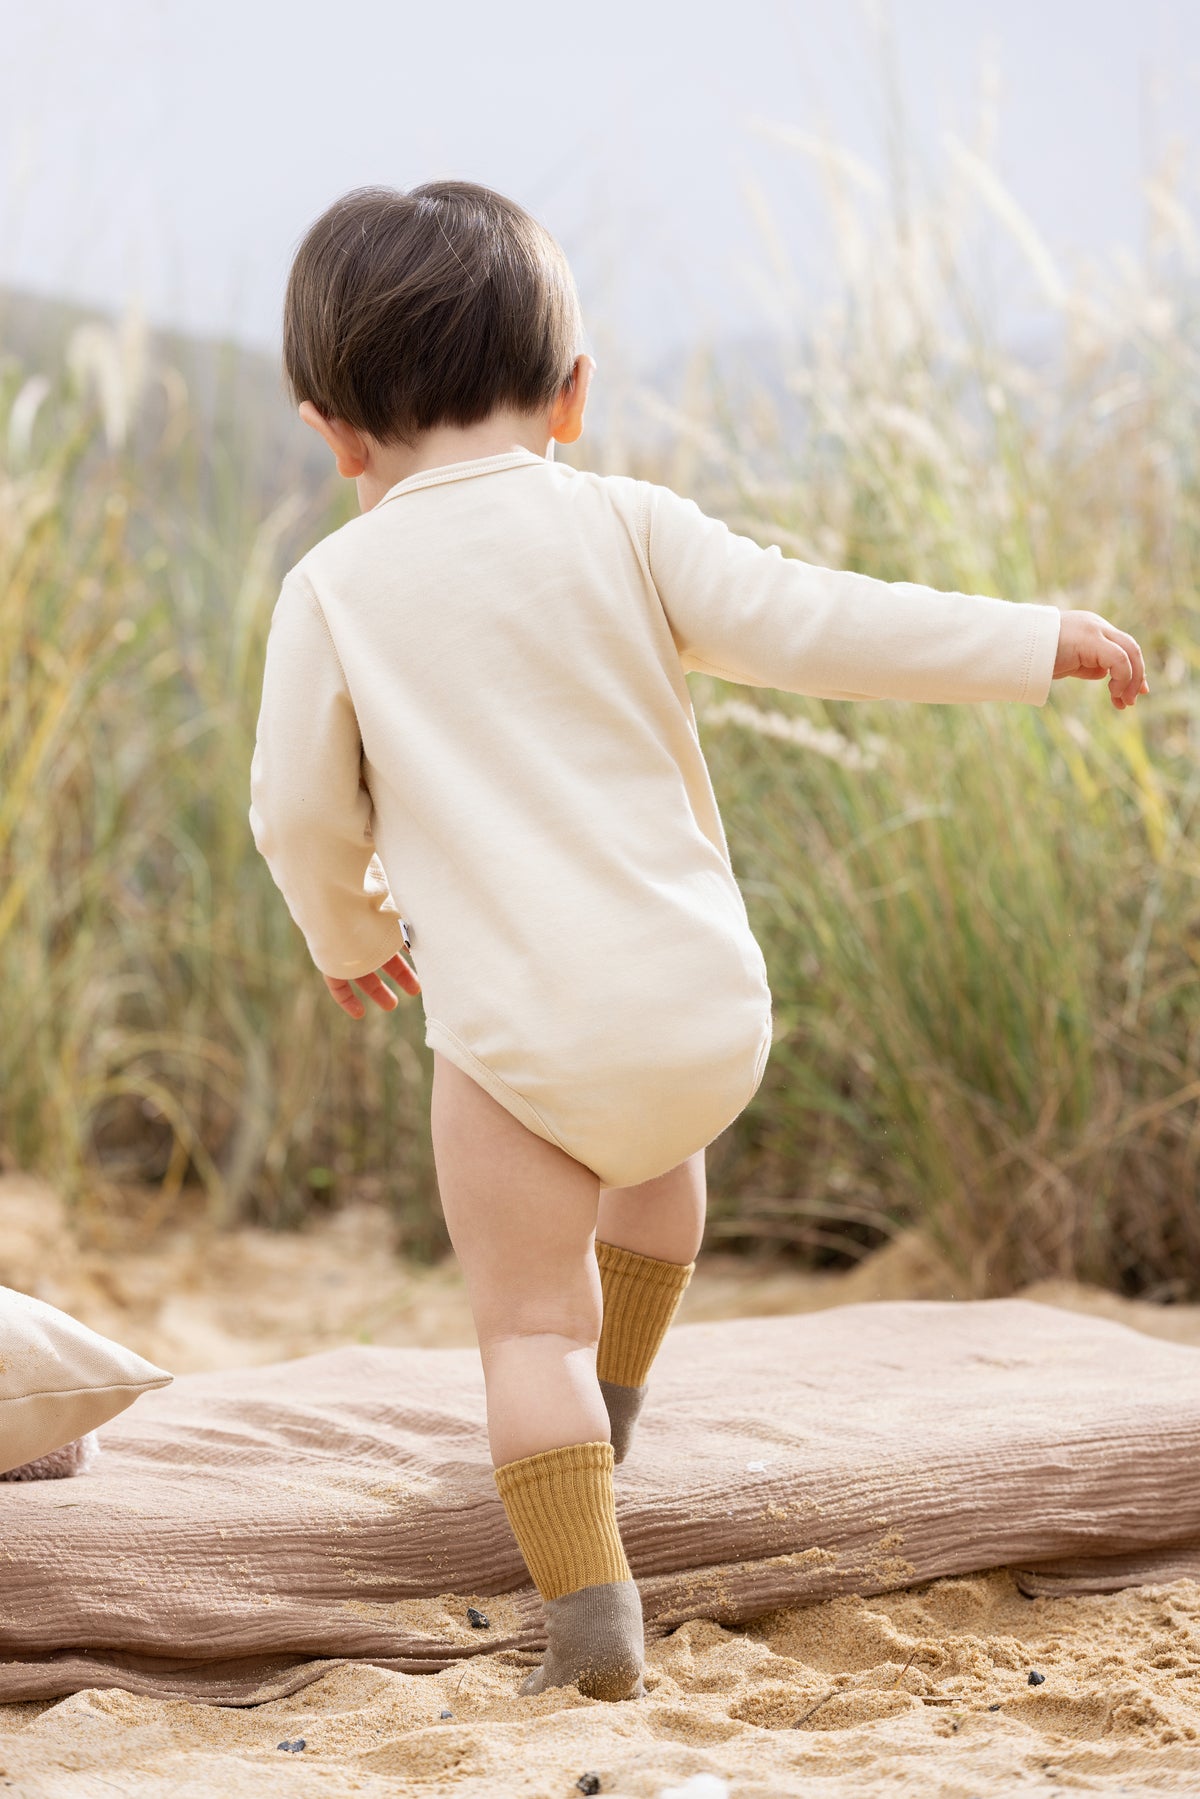 Vauva BBNS - Baby Anti-bacterial Organic Cotton Hazelnut Pattern Bodysuits (2-pack)